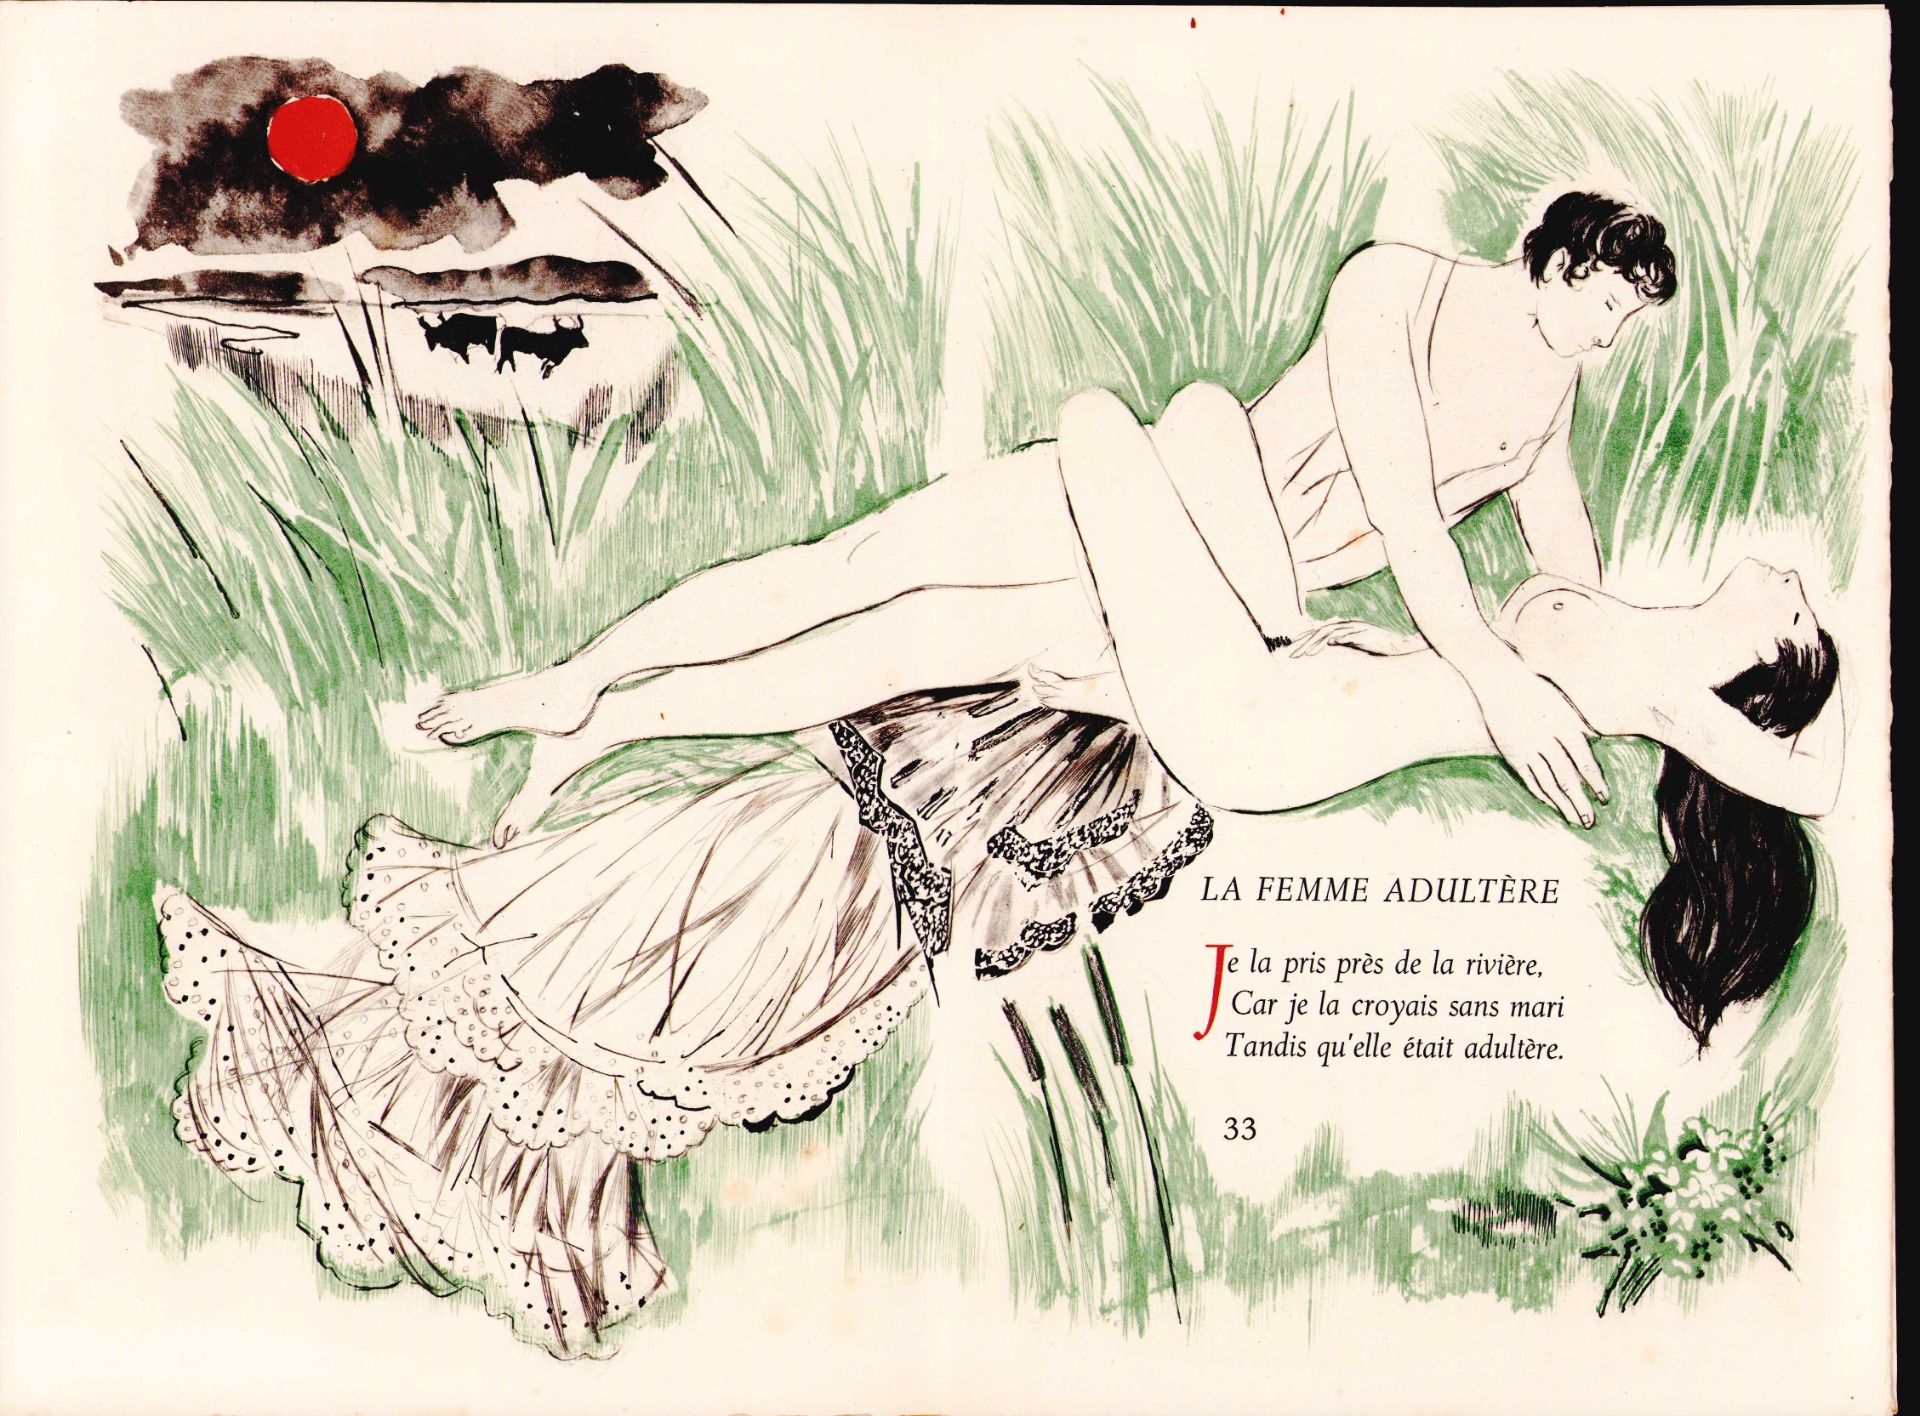 |Illustré| Lorca Federico Garcia, "Romancero Gitan", illustrations de Grau-Sala, 1960 - Image 9 of 9